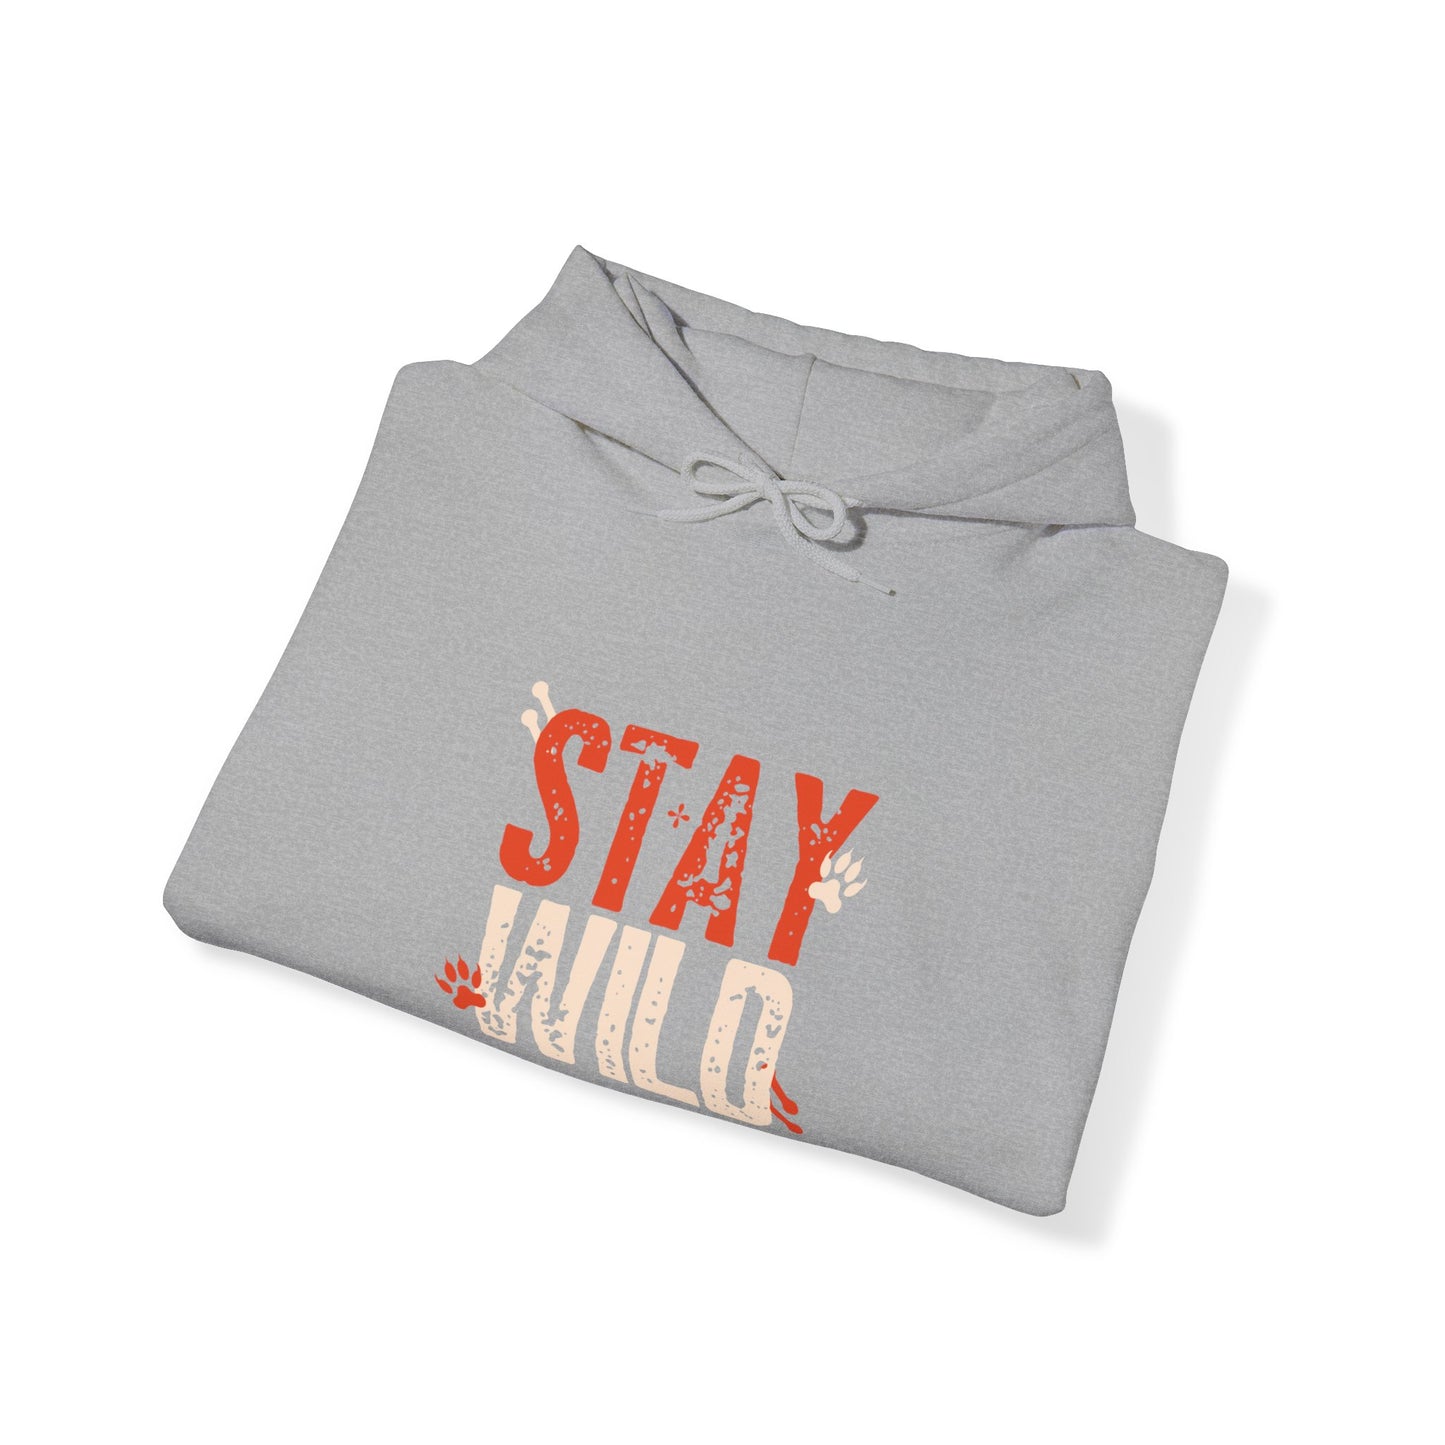 Gildan_Stay Wild_Unisex Heavy Blend™ Hooded Sweatshirt